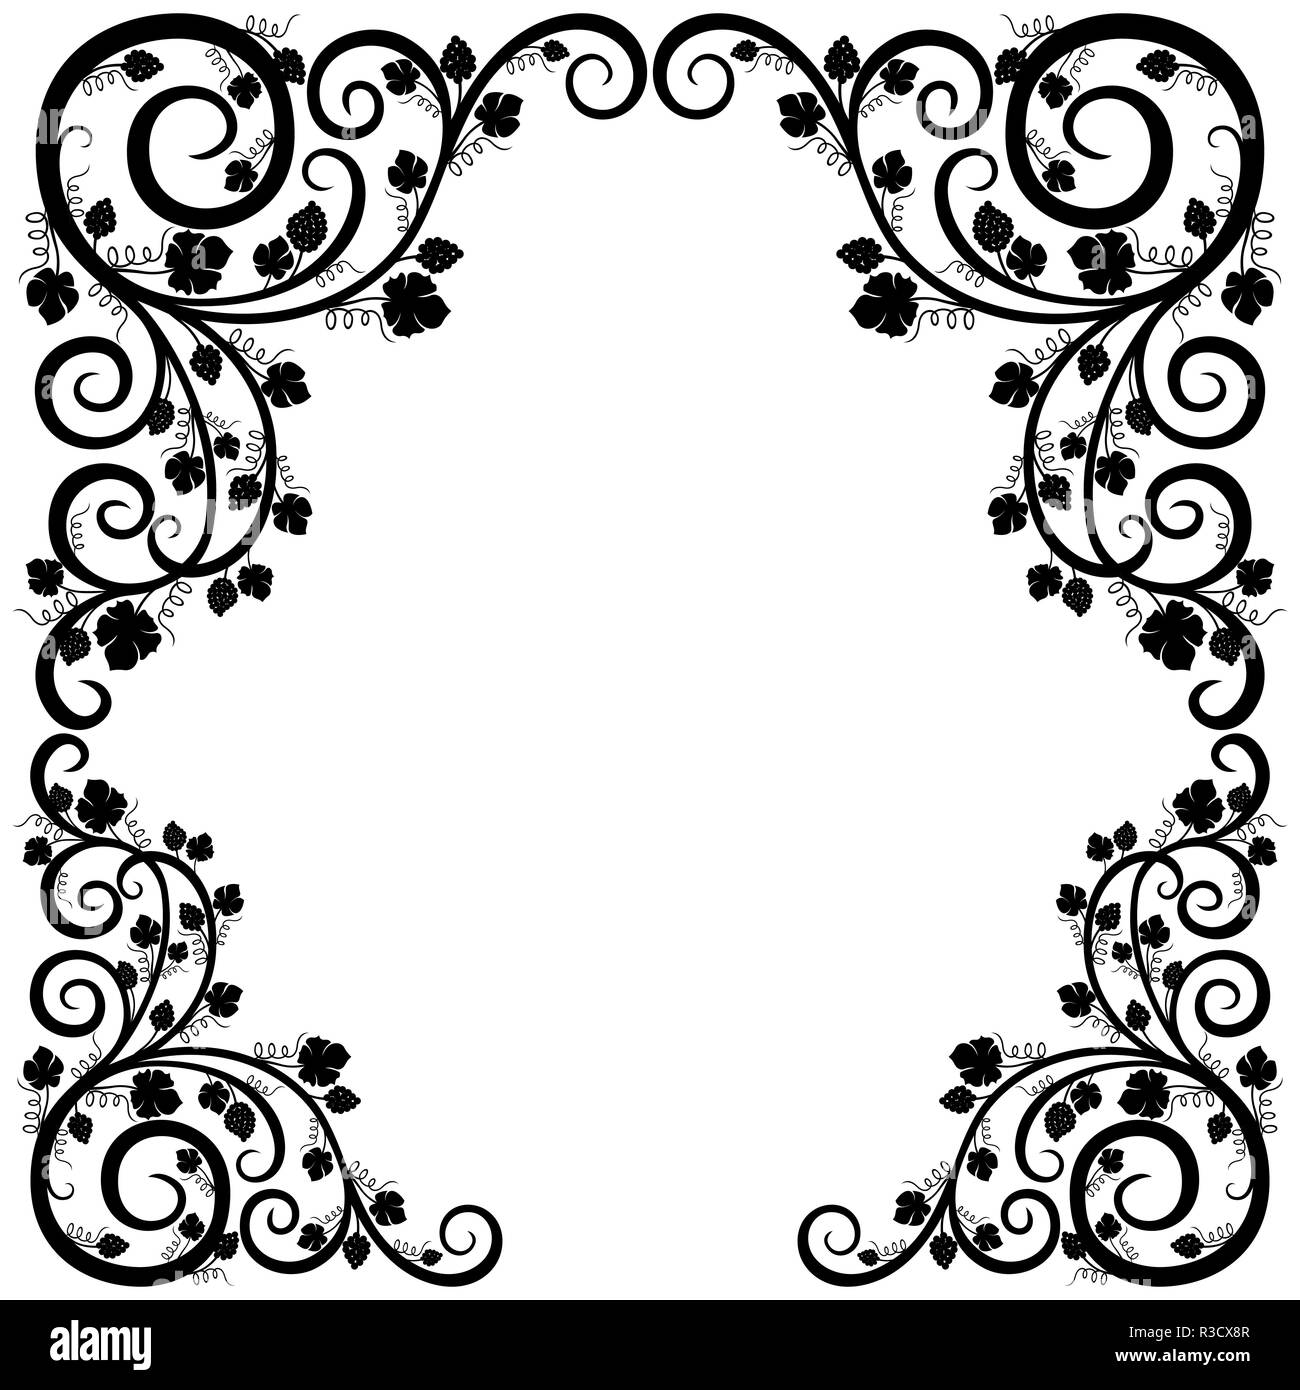 Flower border design Black and White Stock Photos & Images - Alamy